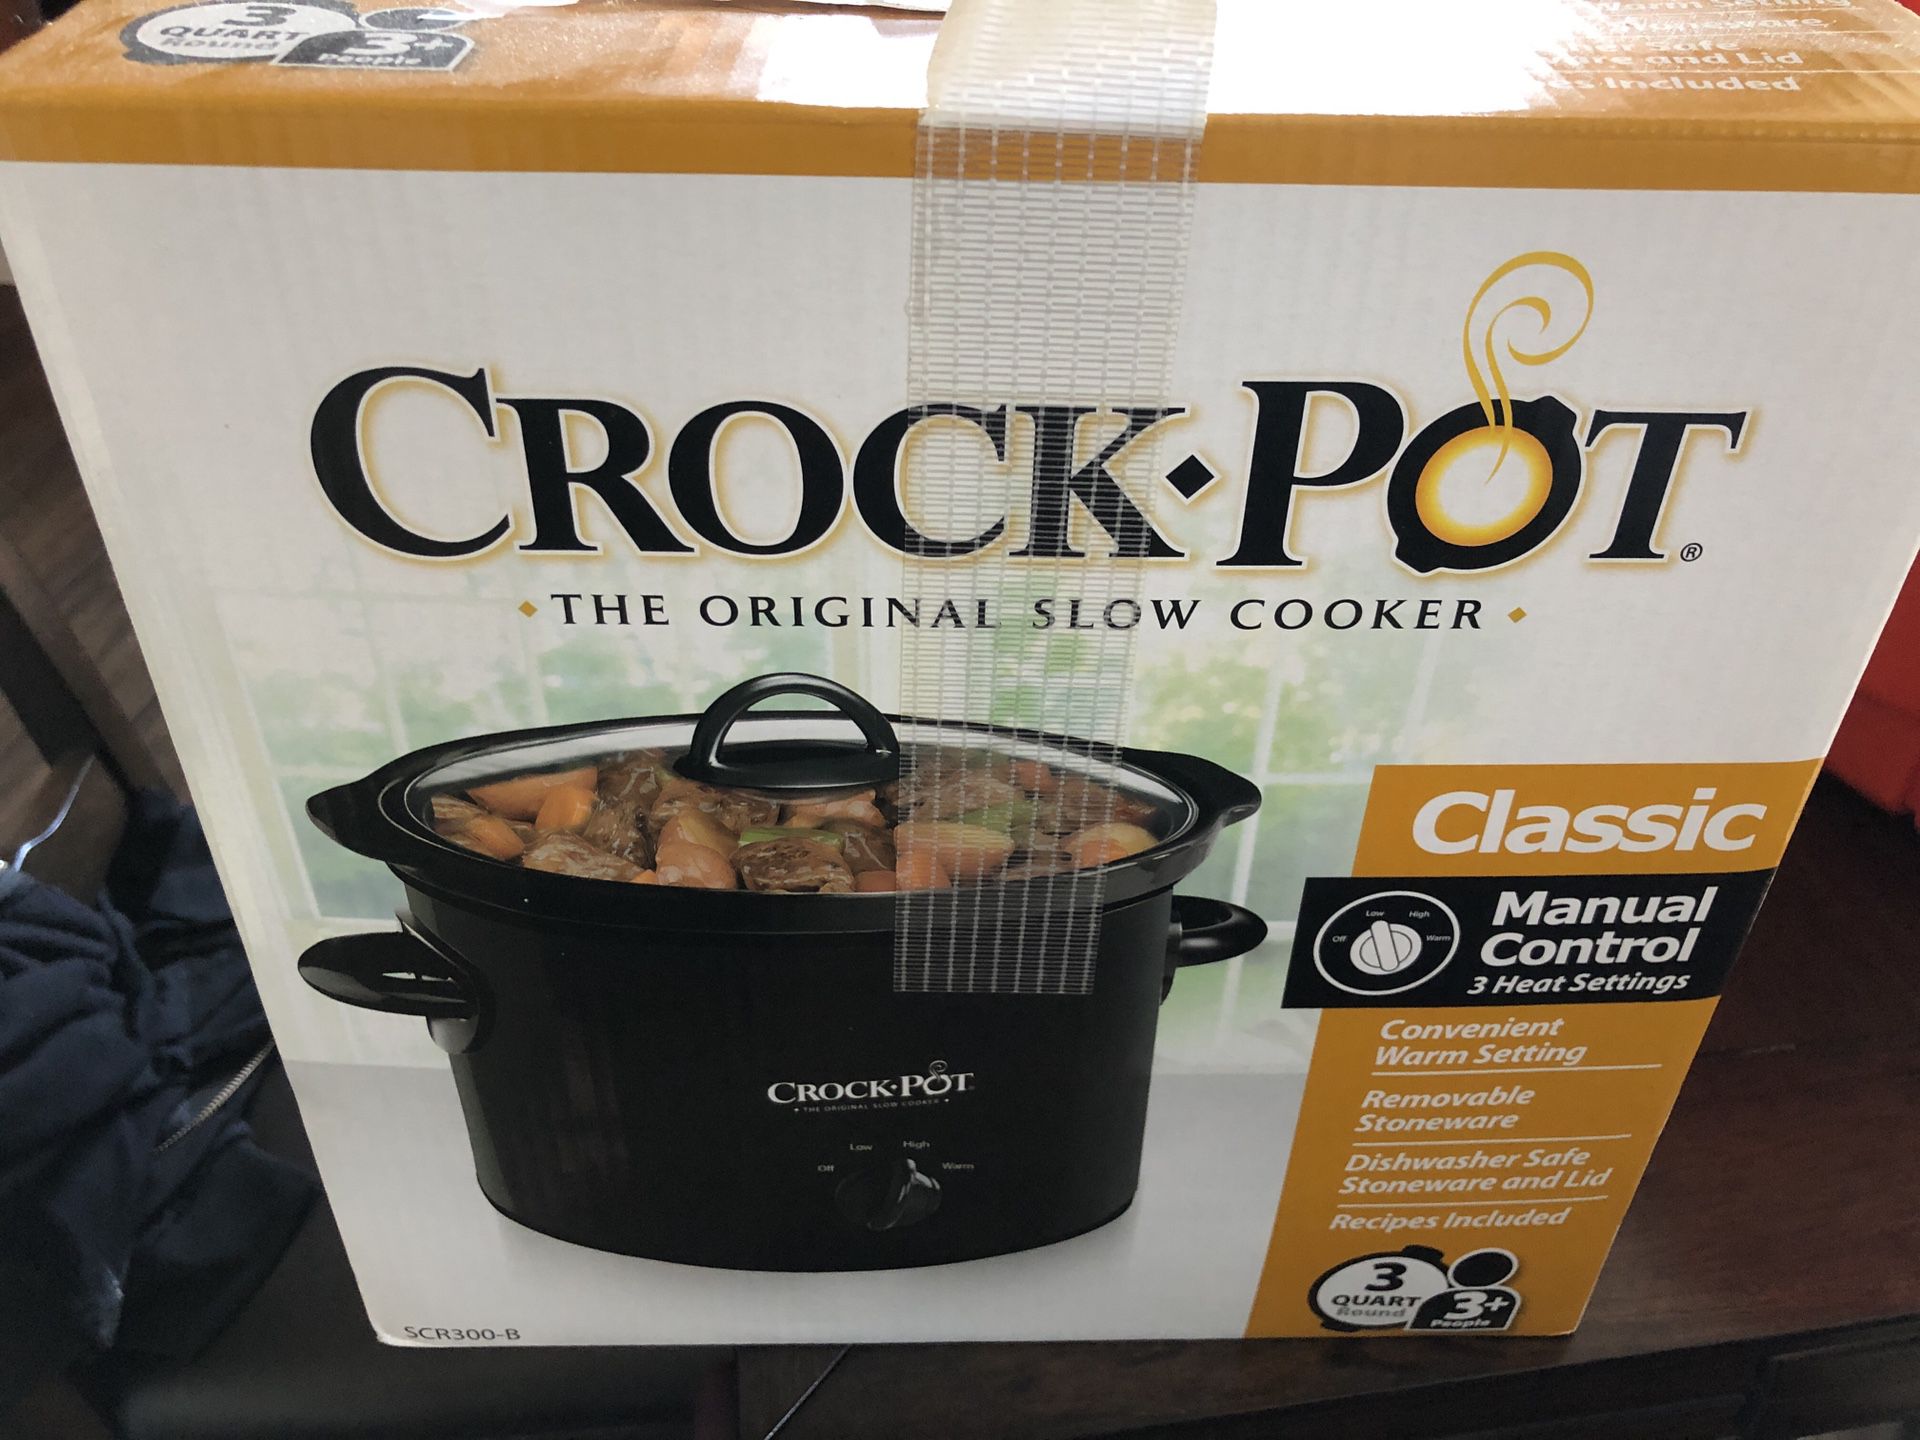 Crockpot original slow cooker